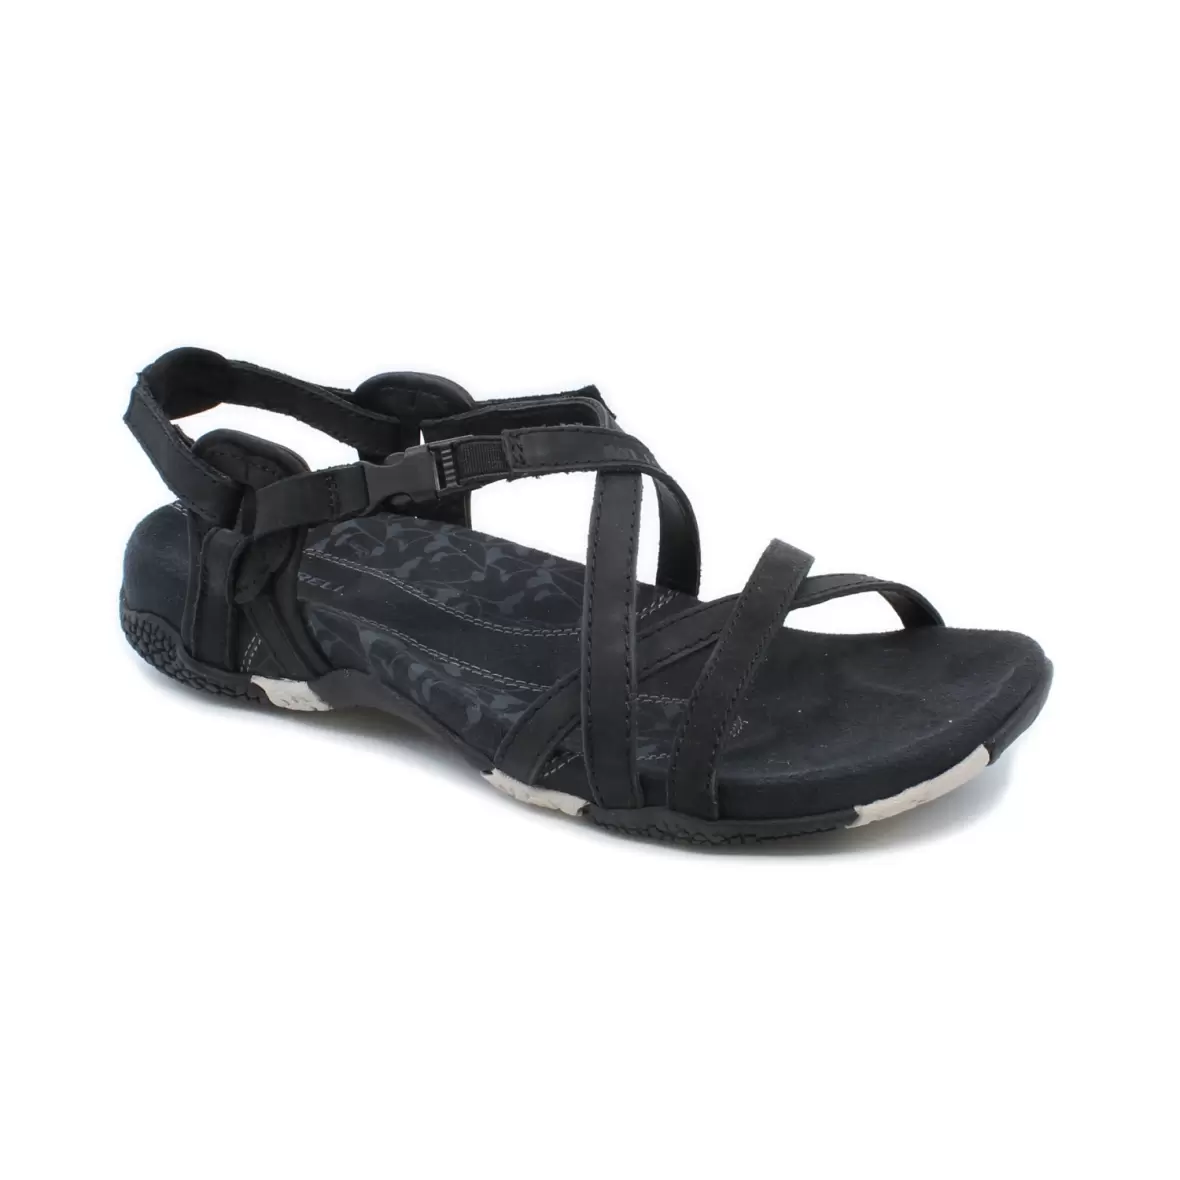 Merrell San Remo II M001454 - Sandal kvinder